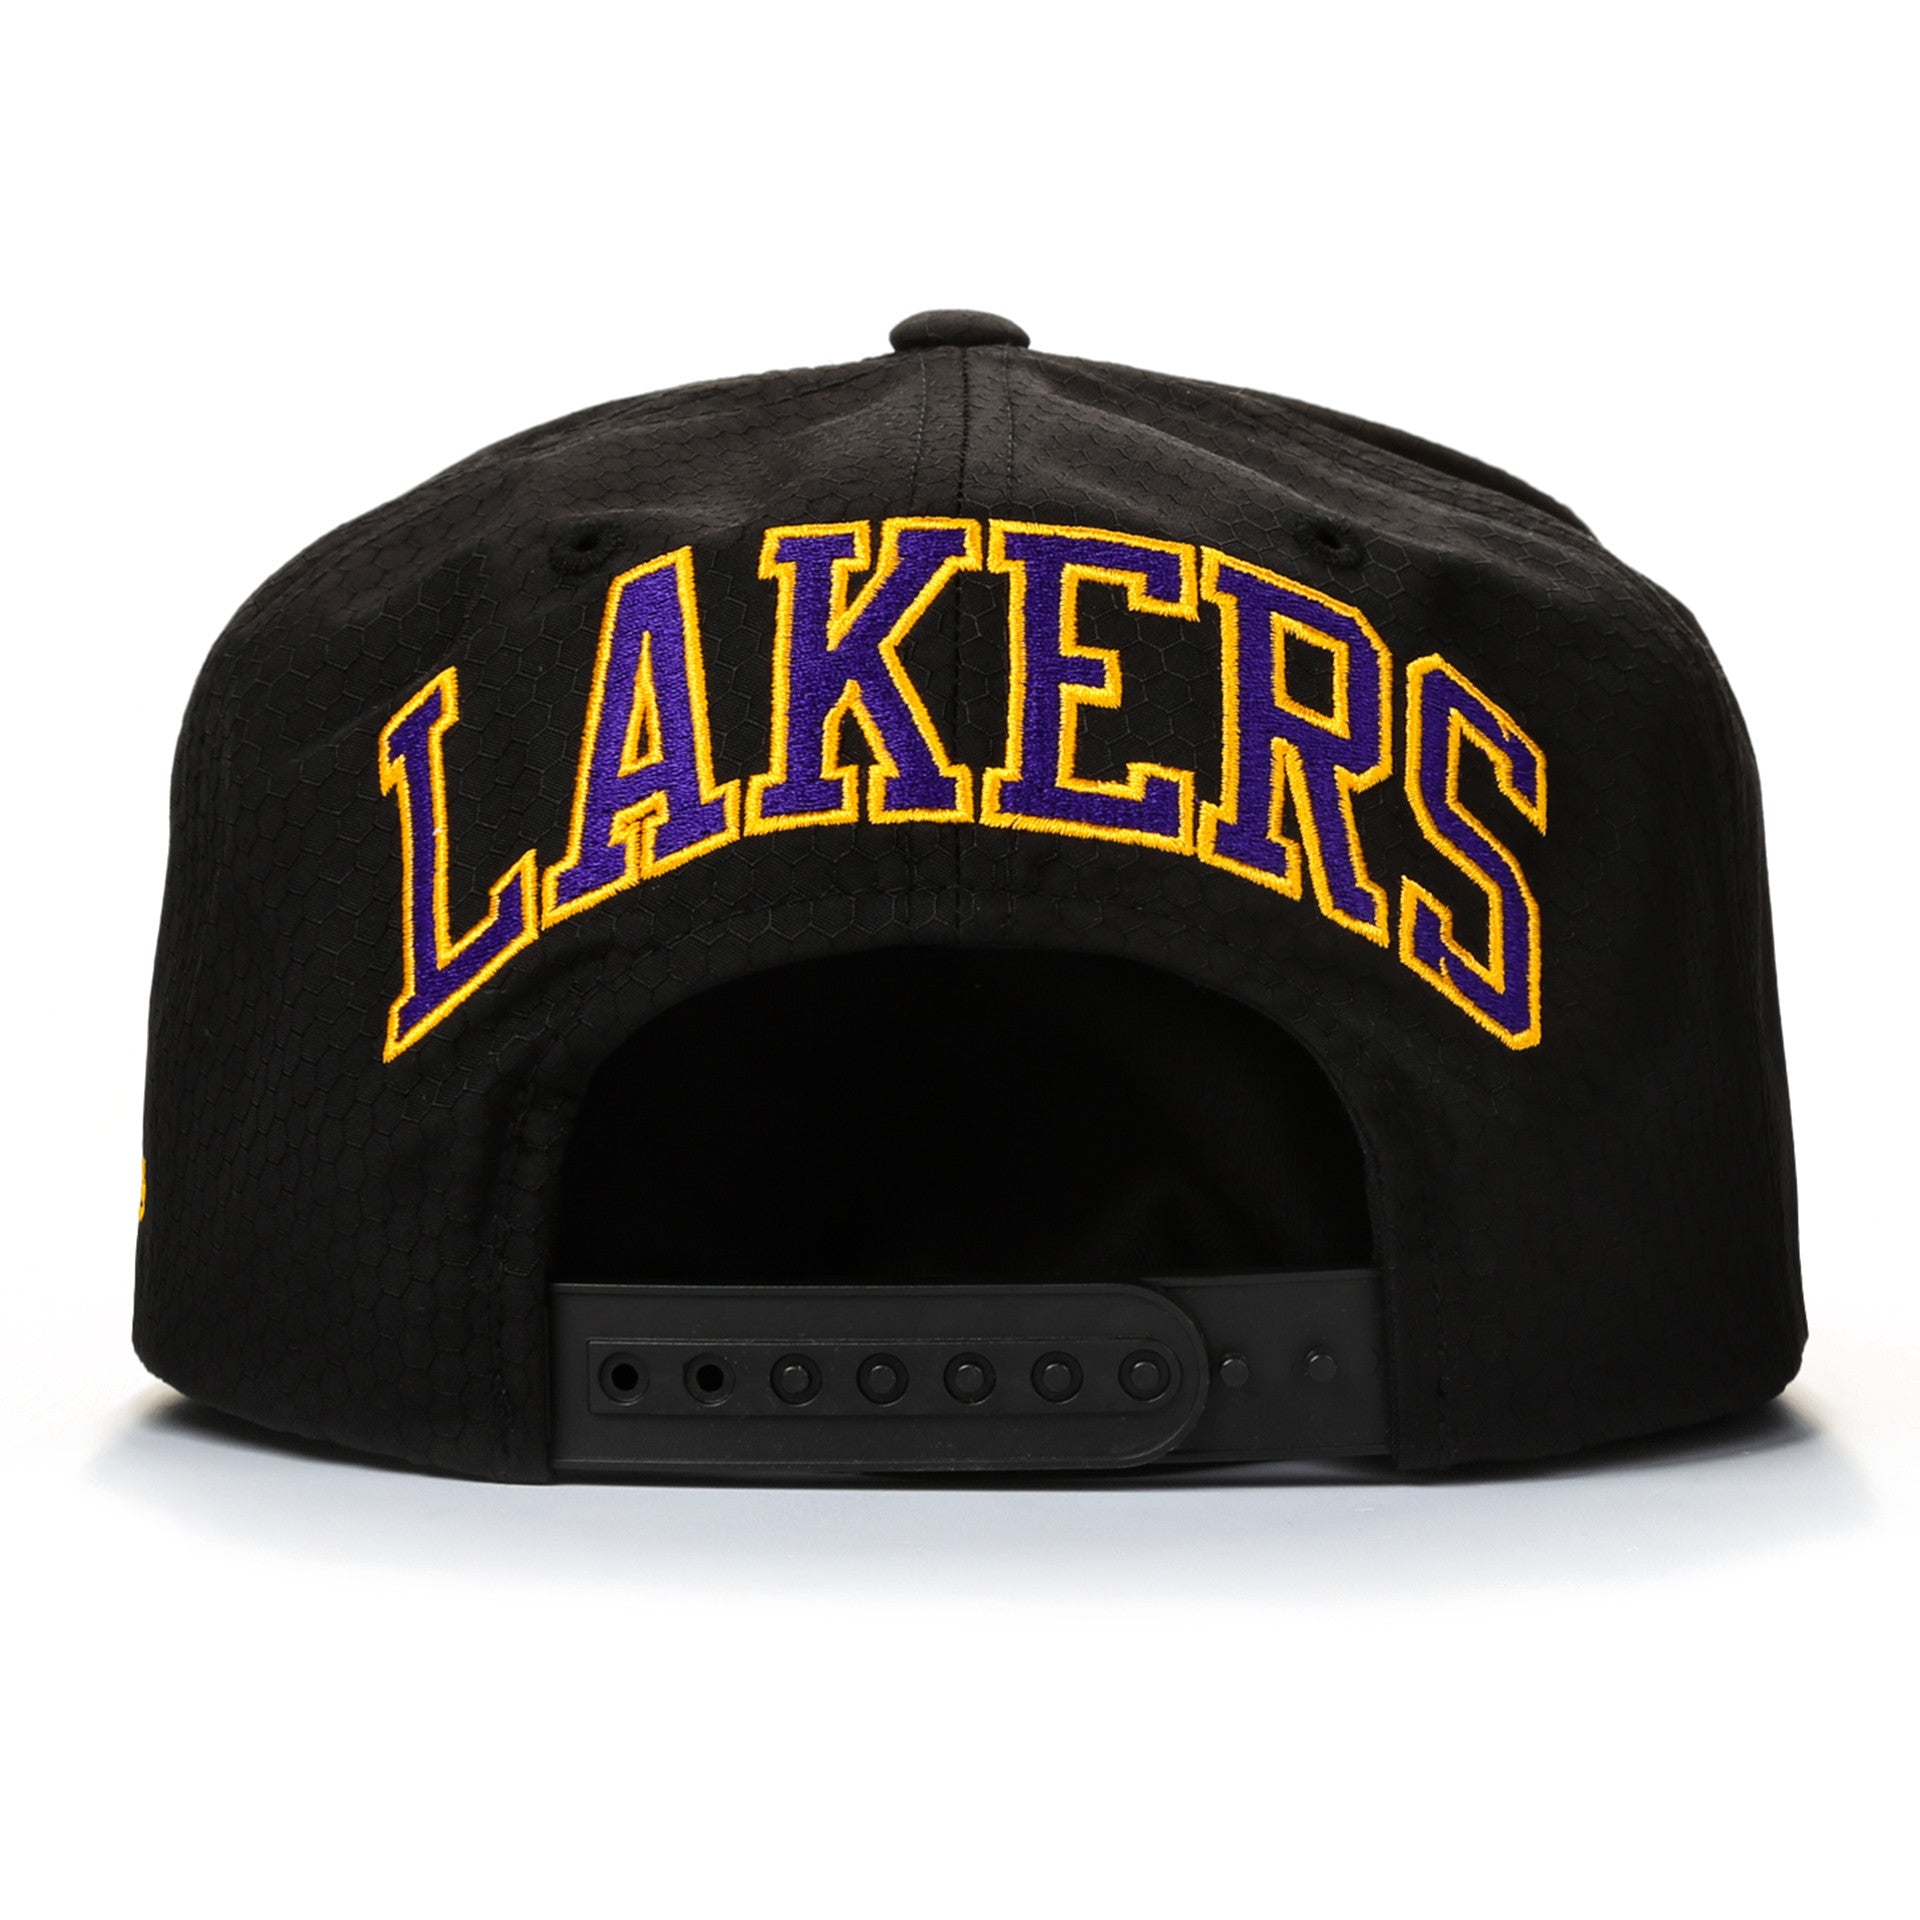 Mitchell & Ness Los Angeles Lakers Snapshot Snapback Cap - Black